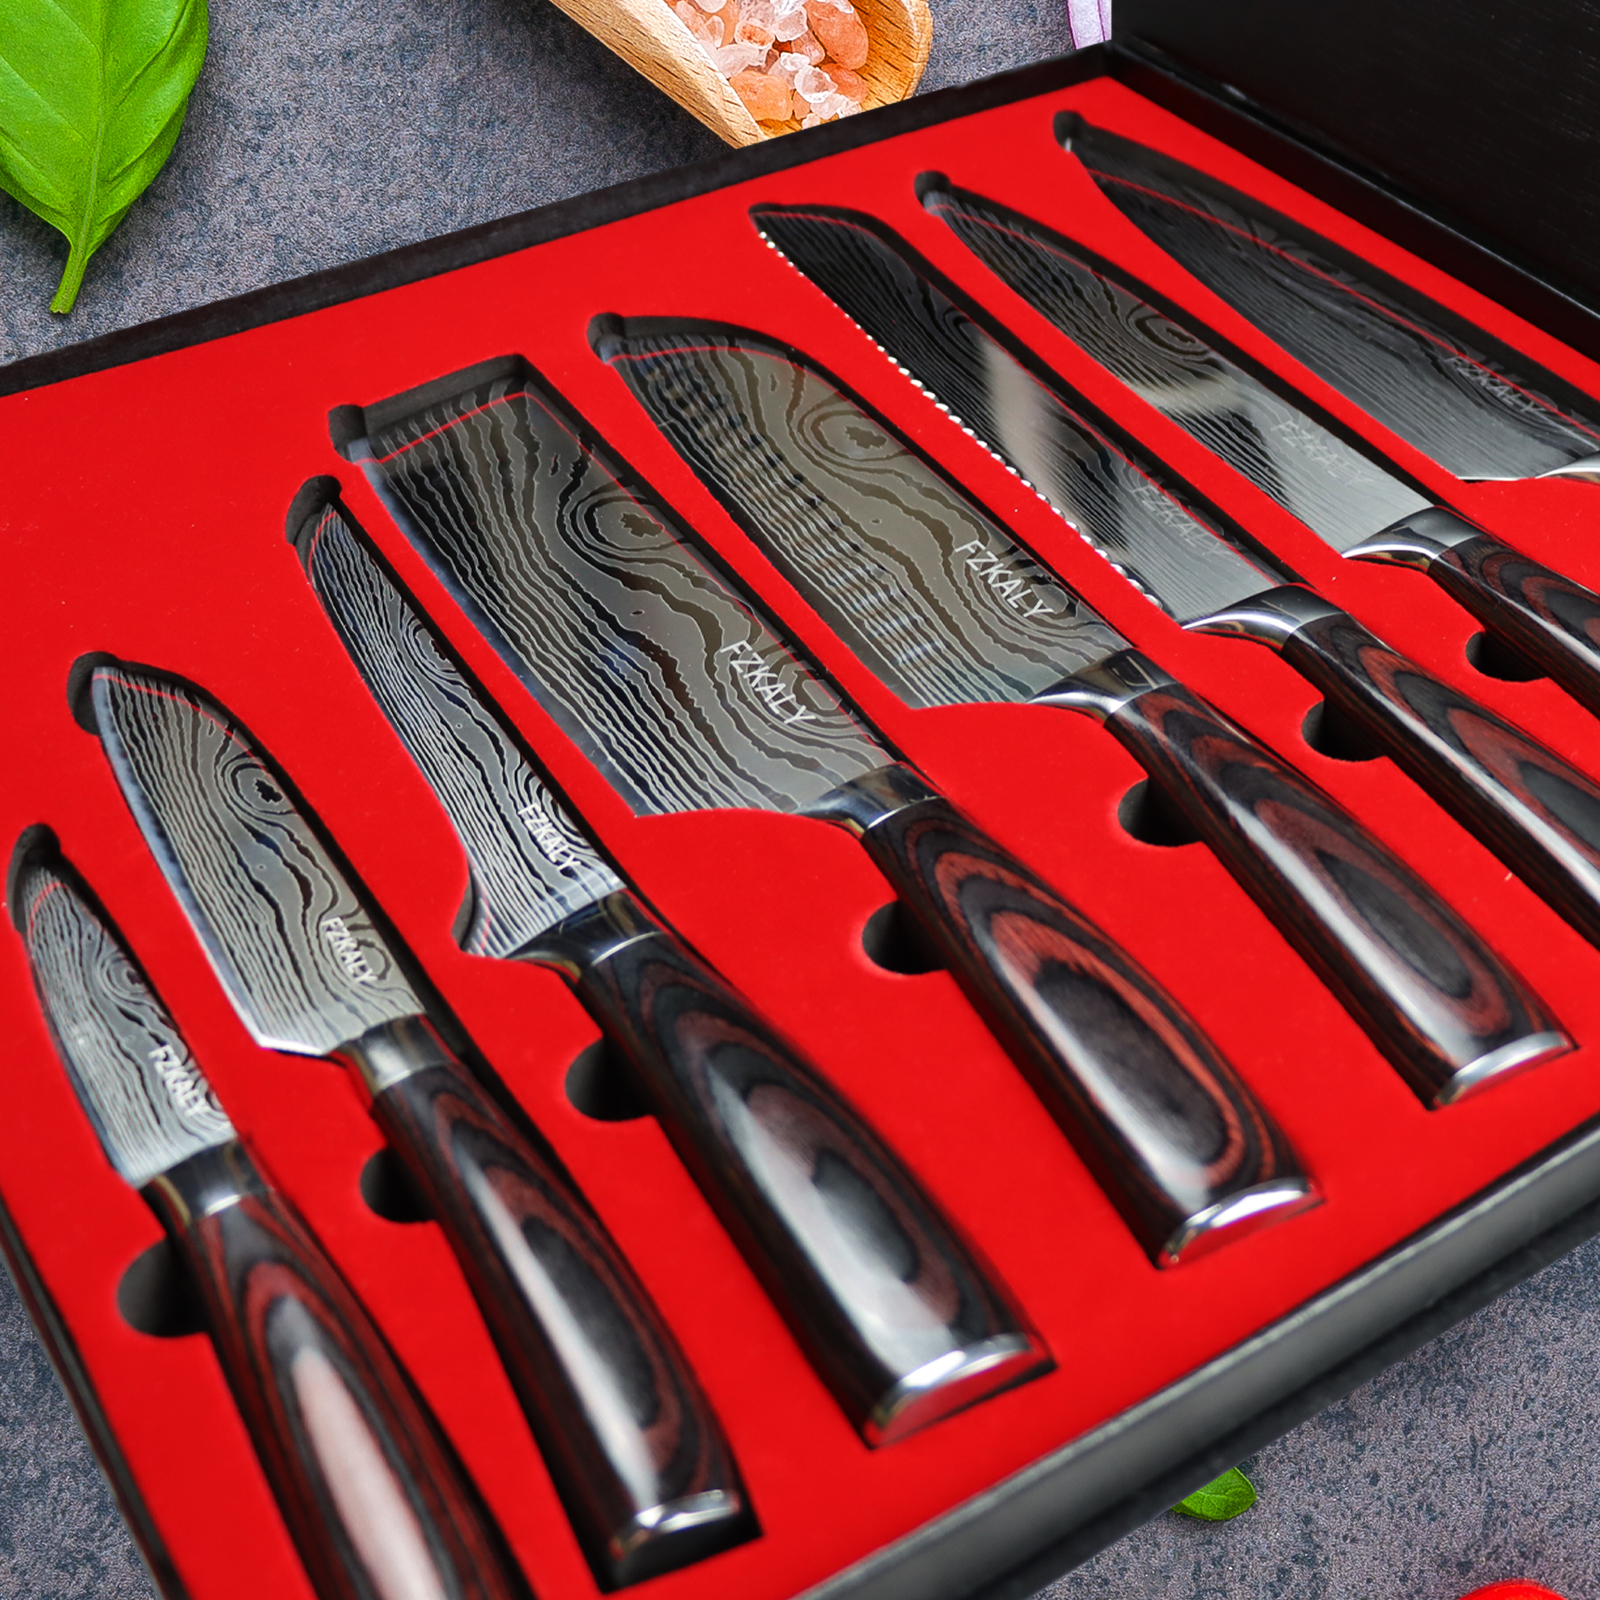 8-Piece Kitchen Knife Set